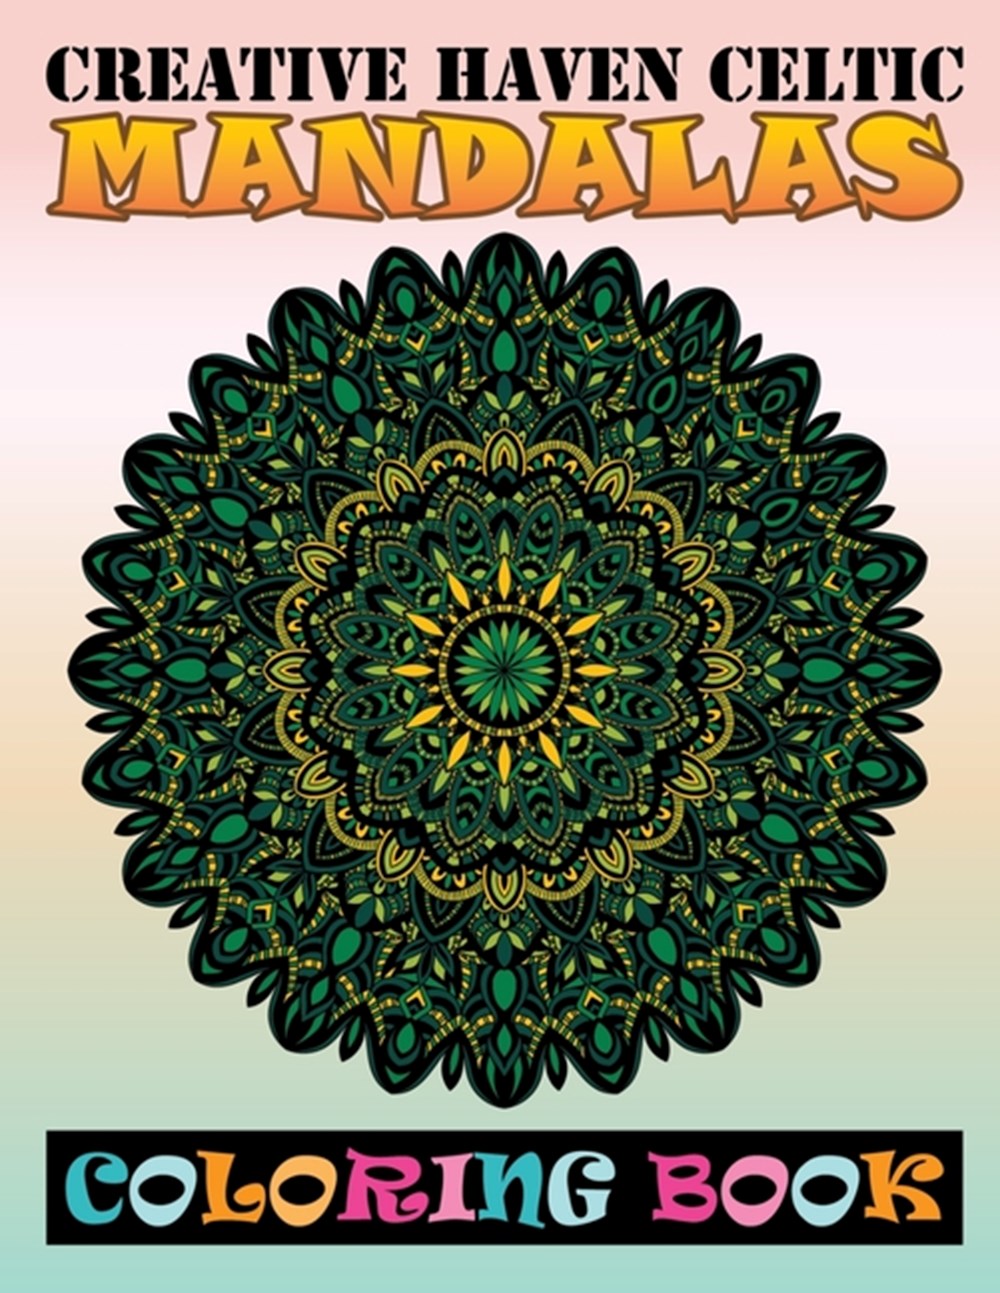 Creative Haven Celtic Mandalas Coloring Book: Beautiful MANDALAS Adult Coloring Book Friendly Relaxi